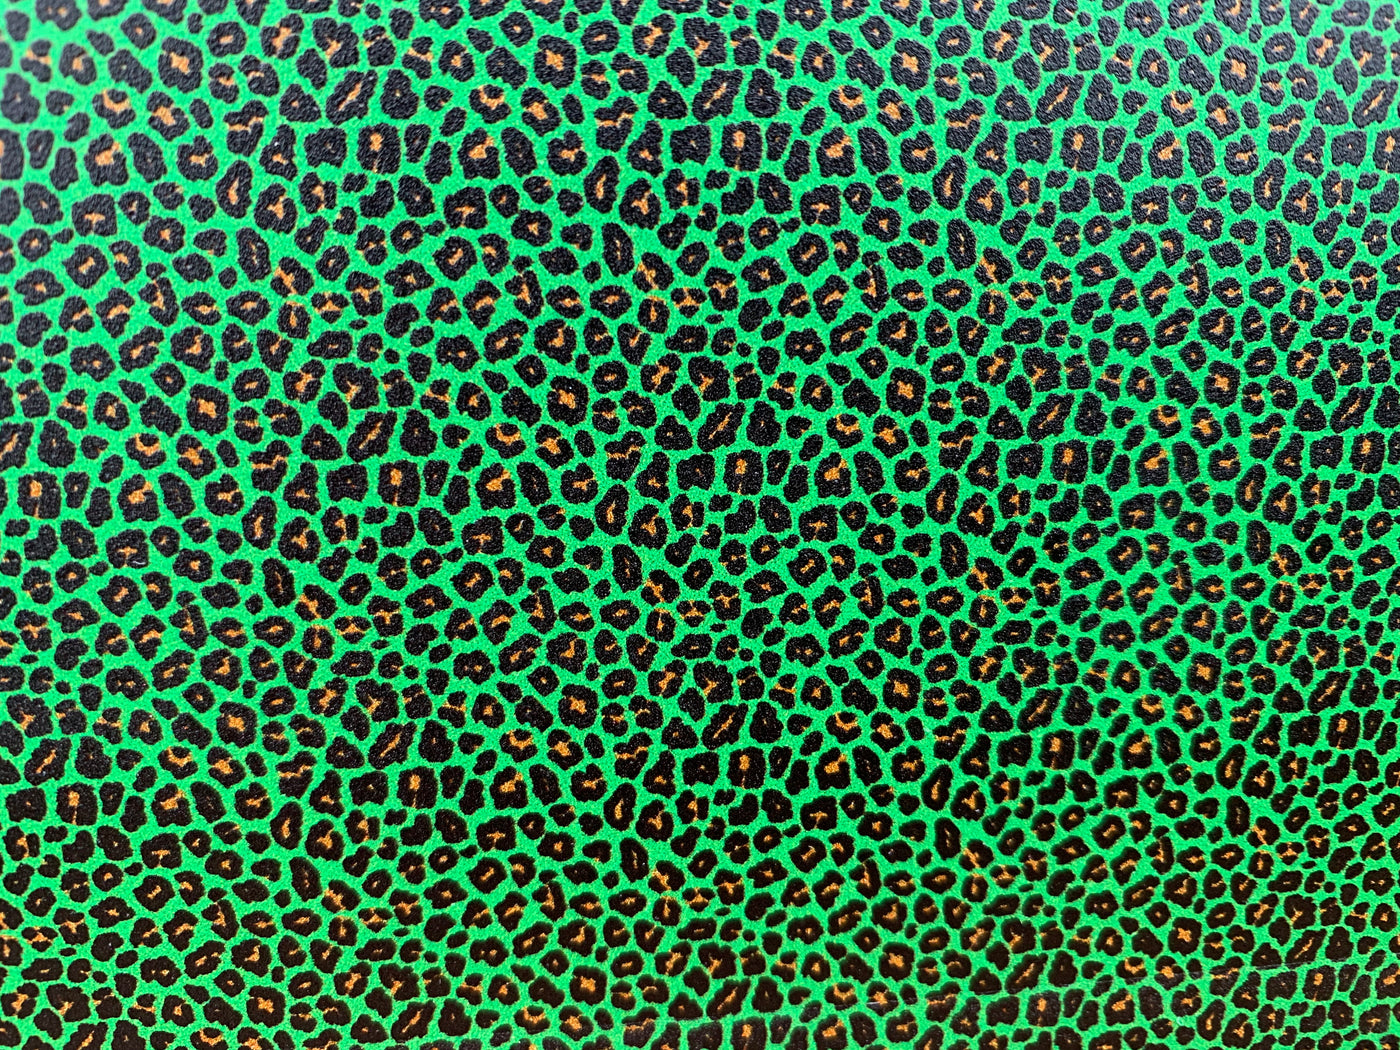 PatternPly® Micro Green Leopard